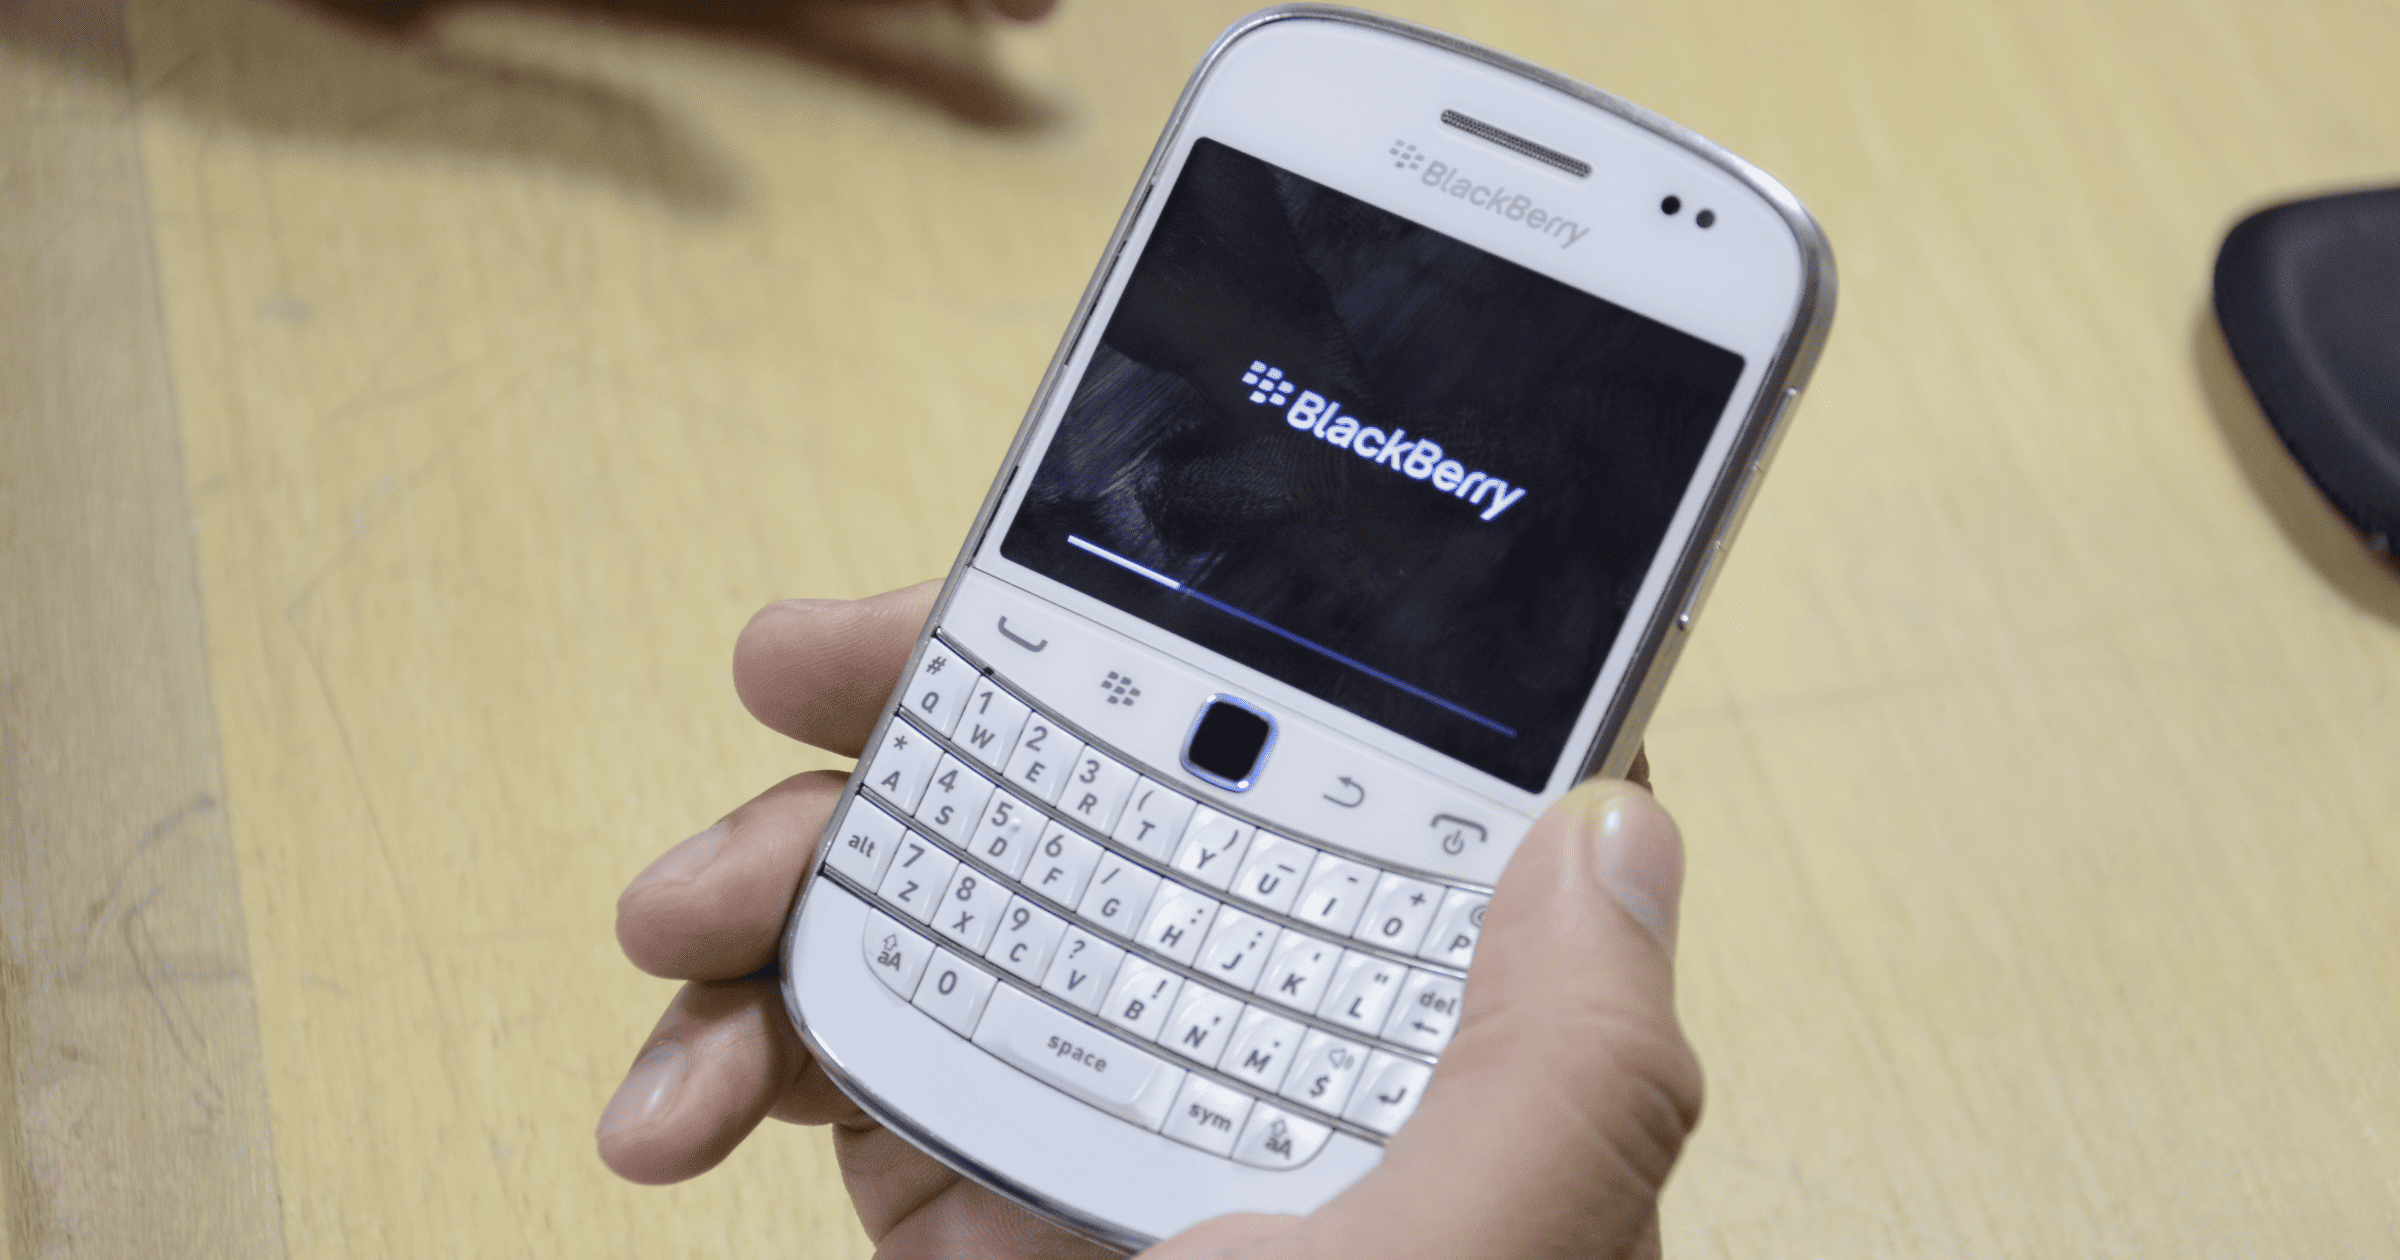 Blackberry smartphone turning on